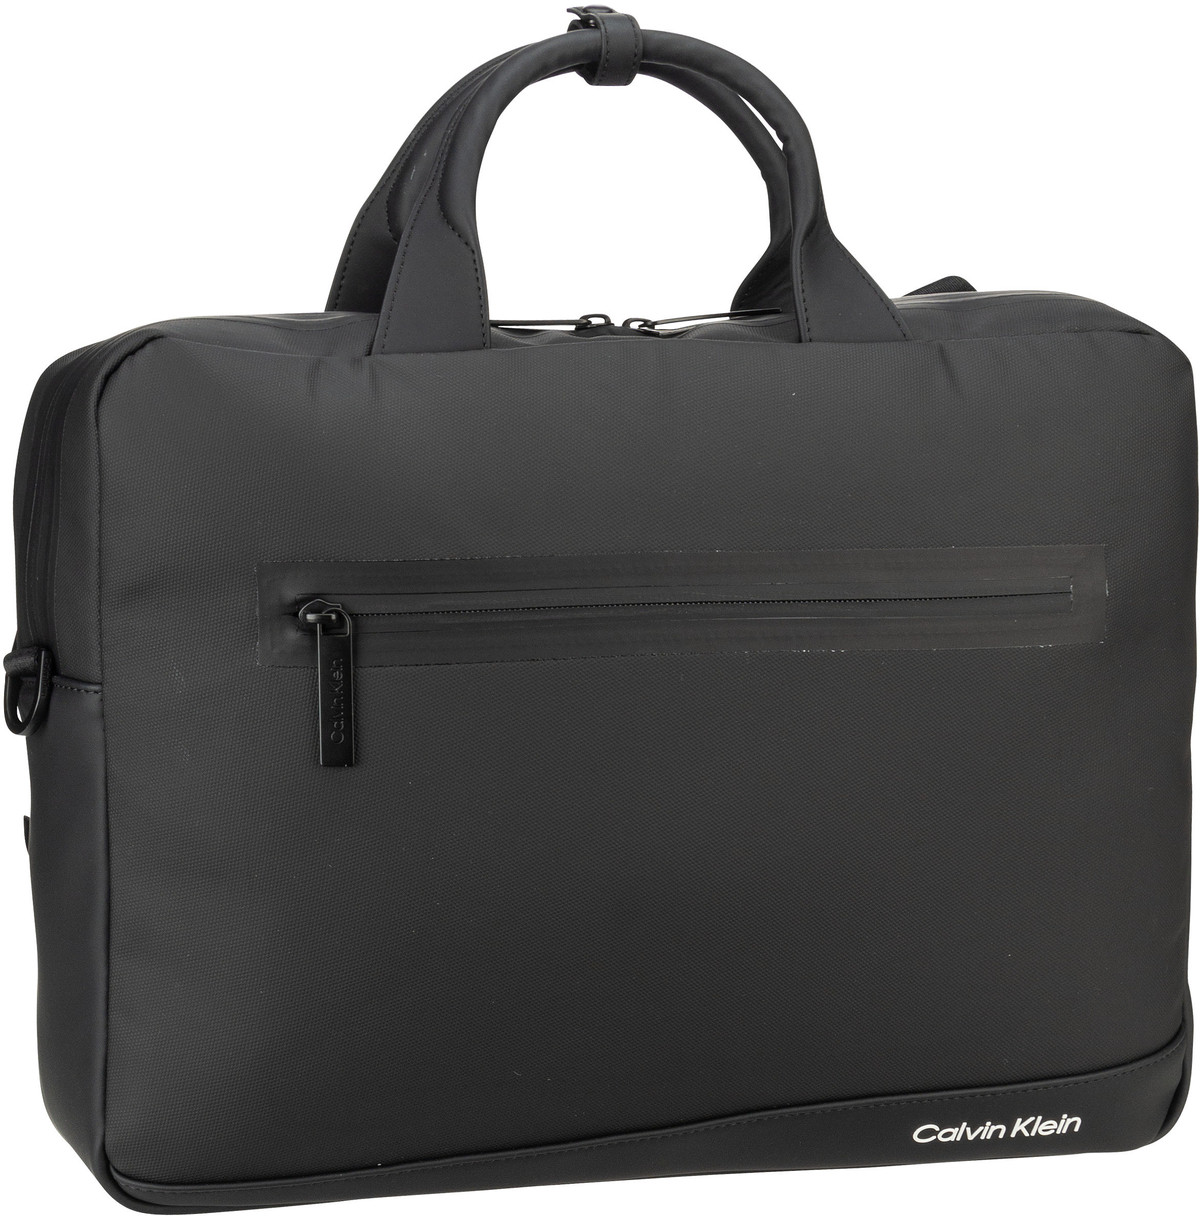 Calvin Klein Rubberized Conv Laptop Bag PSP24  in Schwarz (10.2 Liter), Aktentasche